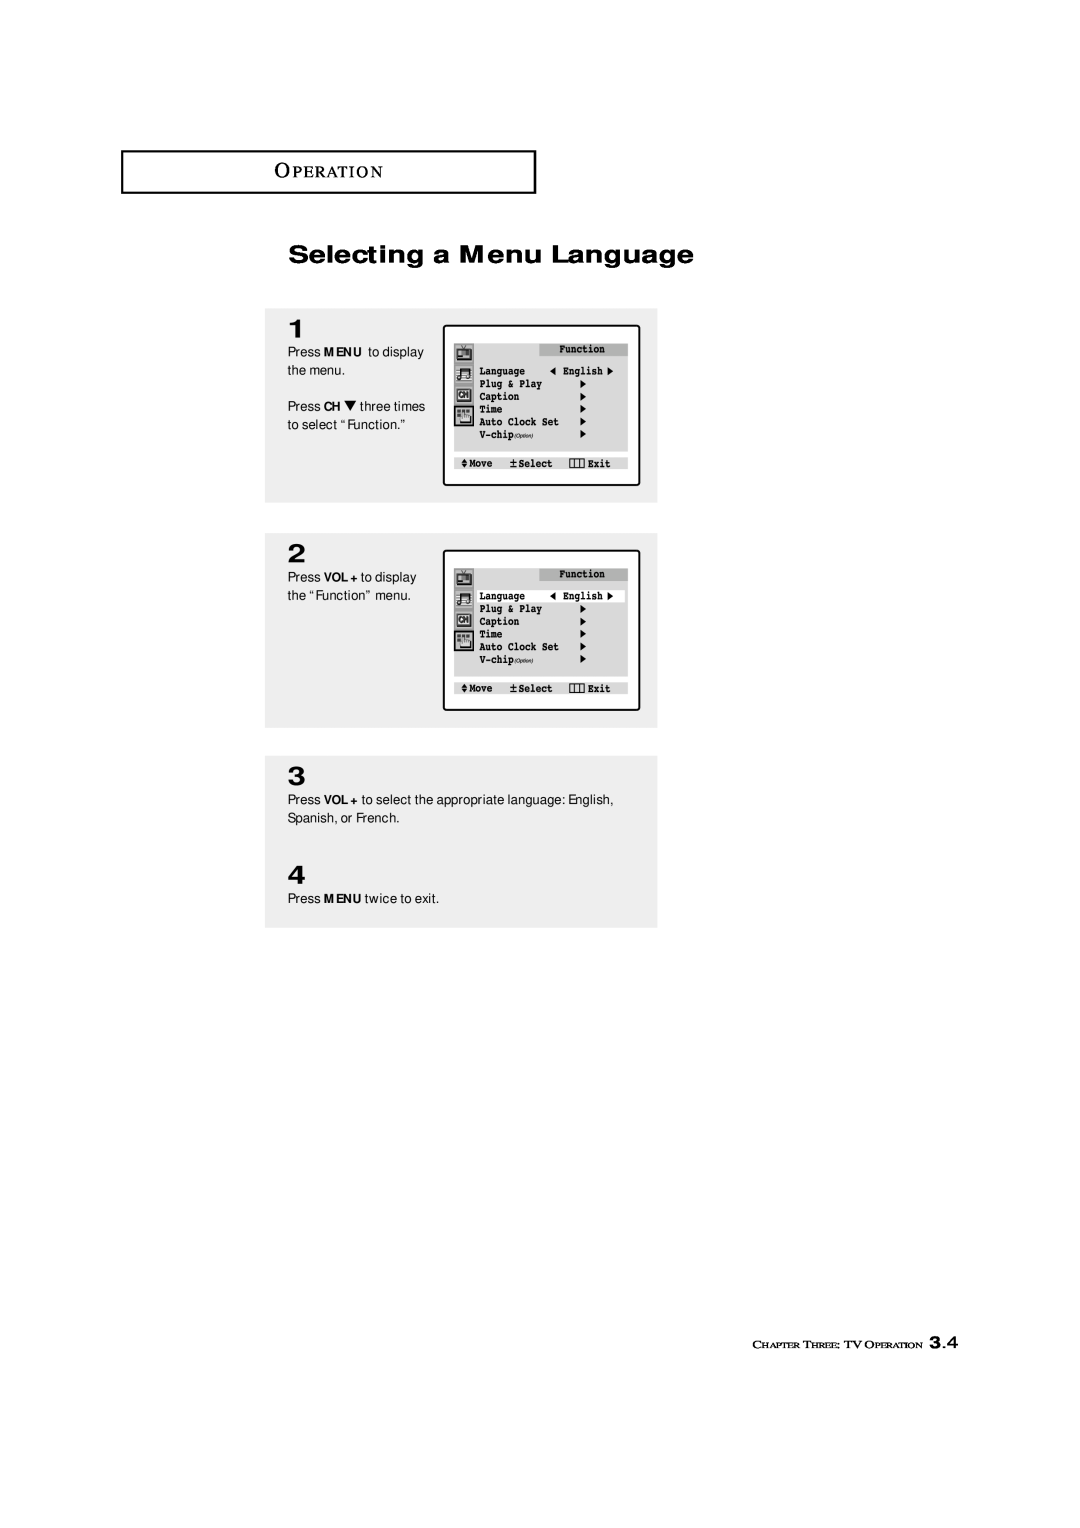 Samsung TXL 3676, TXL 3276, TXK 3676 Selecting a Menu Language, Press MENU to display the menu, Press MENU twice to exit 